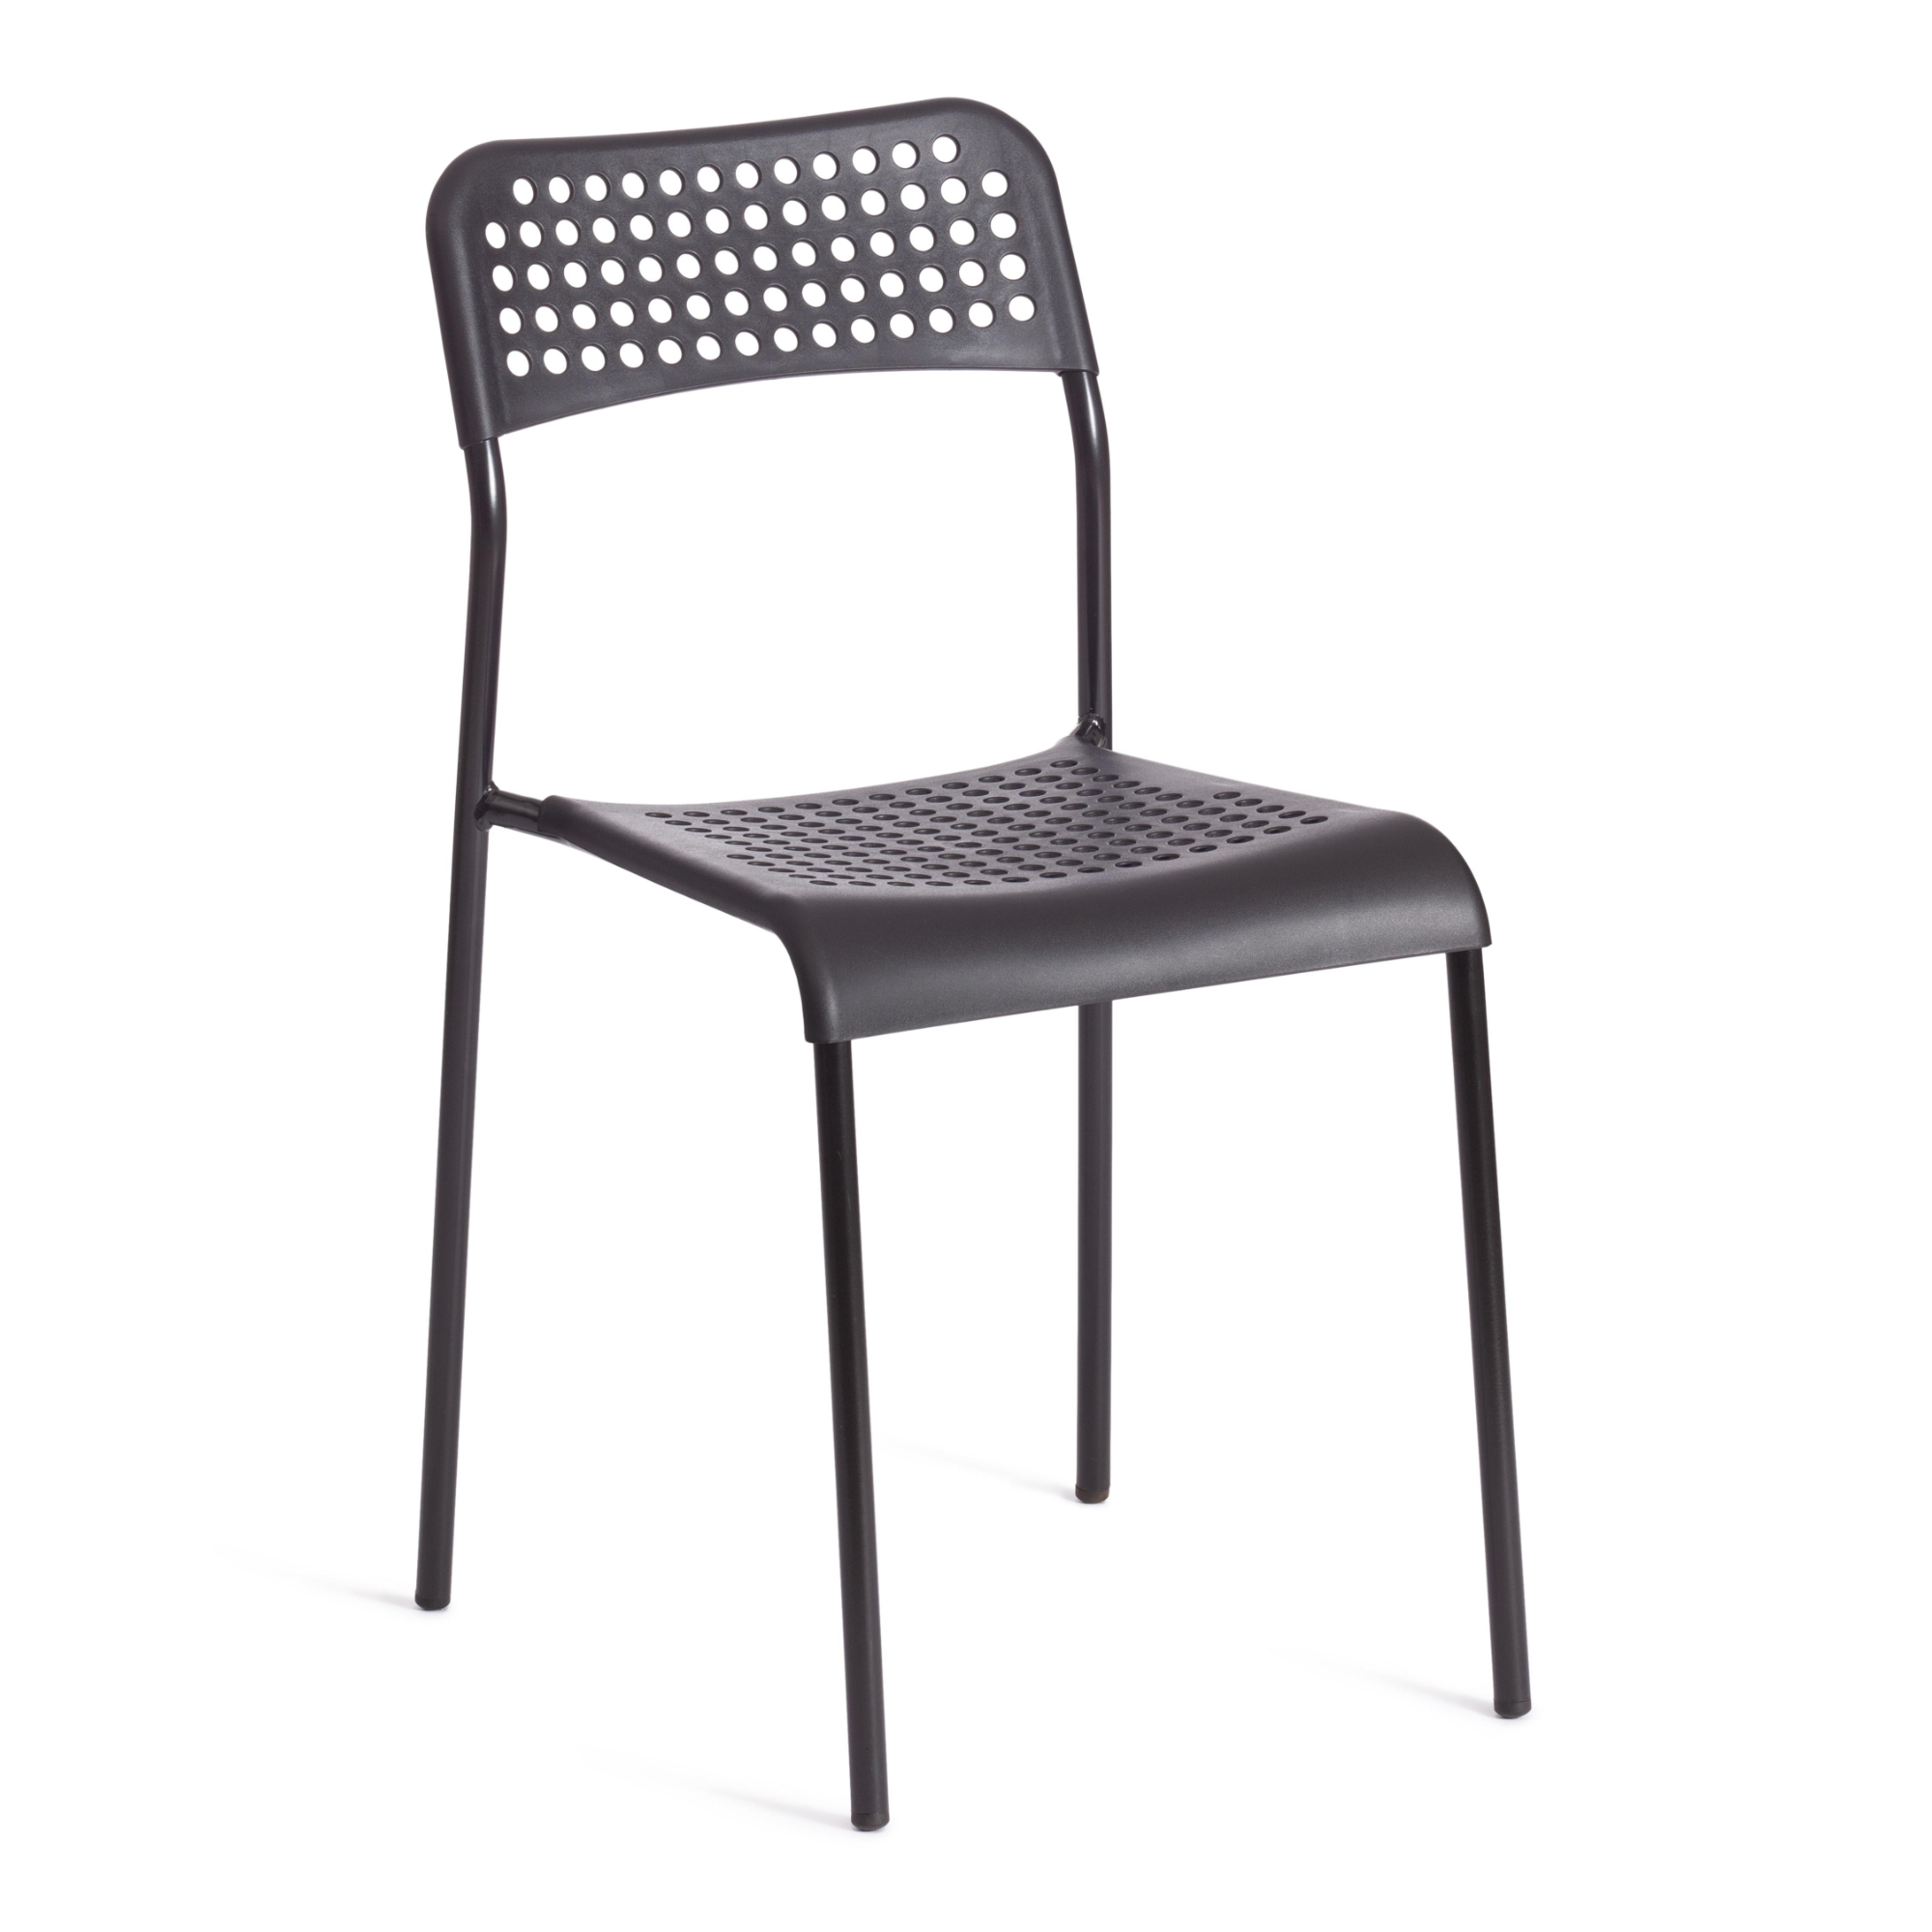 Стул ТС Adde черный пластиковый с металлическими ножками 39х49х78 см стул тс cindy chair пластиковый с ножками из бука белый 45х51х82 см